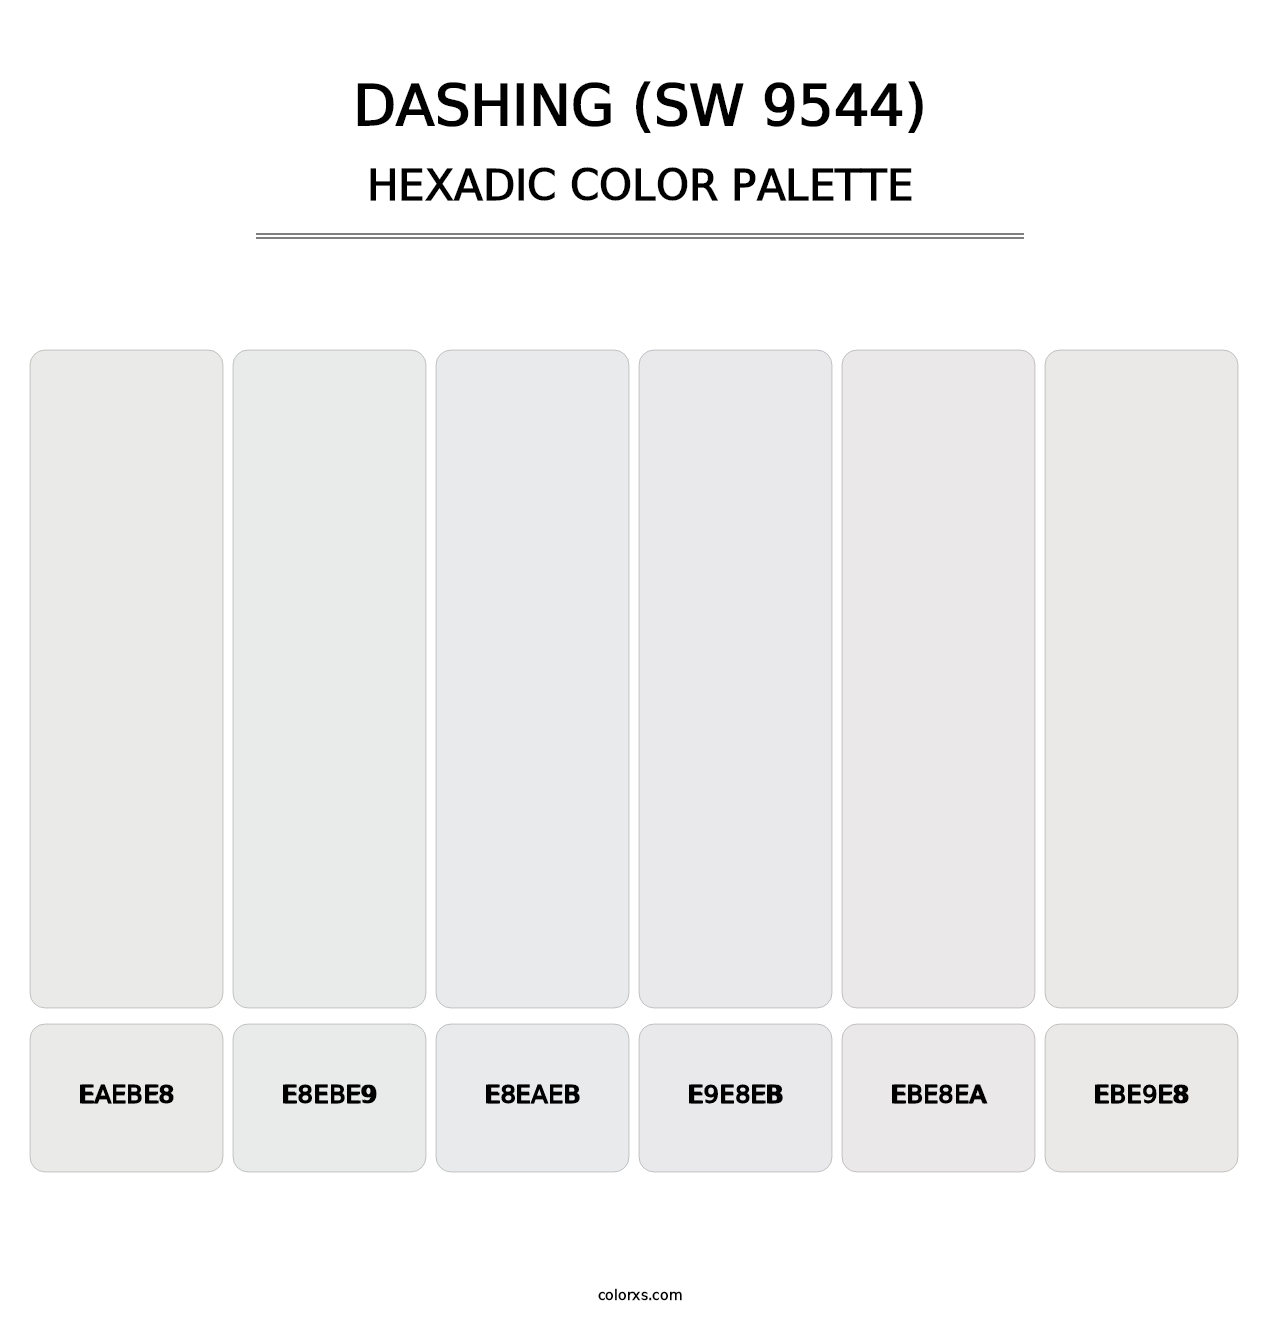 Dashing (SW 9544) - Hexadic Color Palette